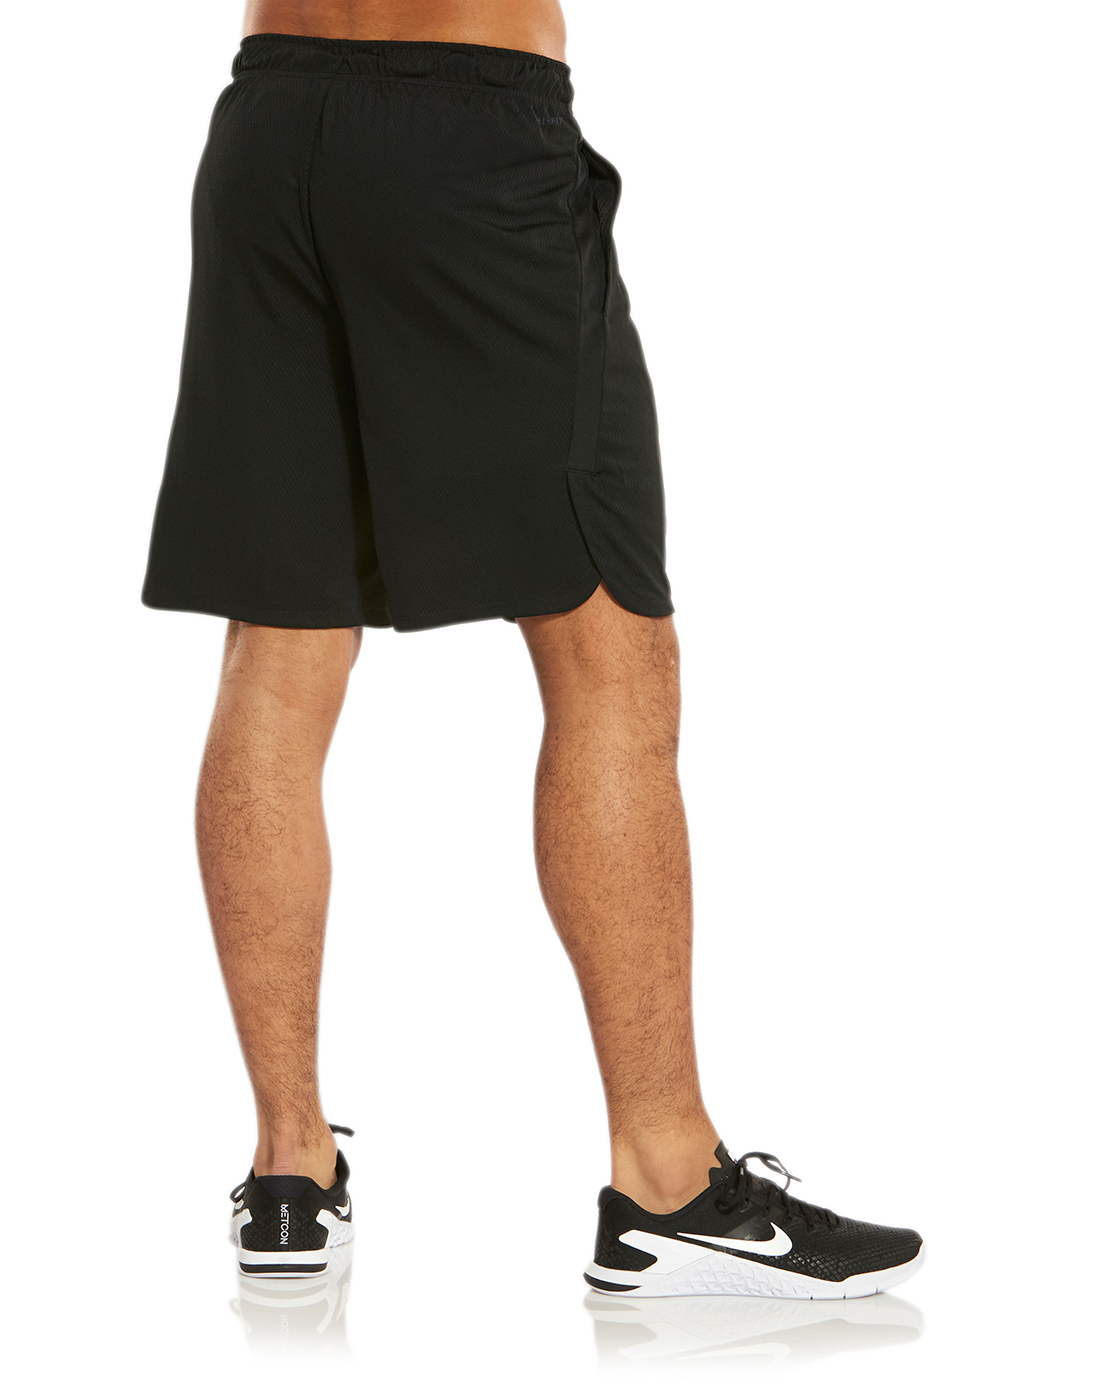 Nike Mens Dry 4.0 Shorts - Black | Life Style Sports EU